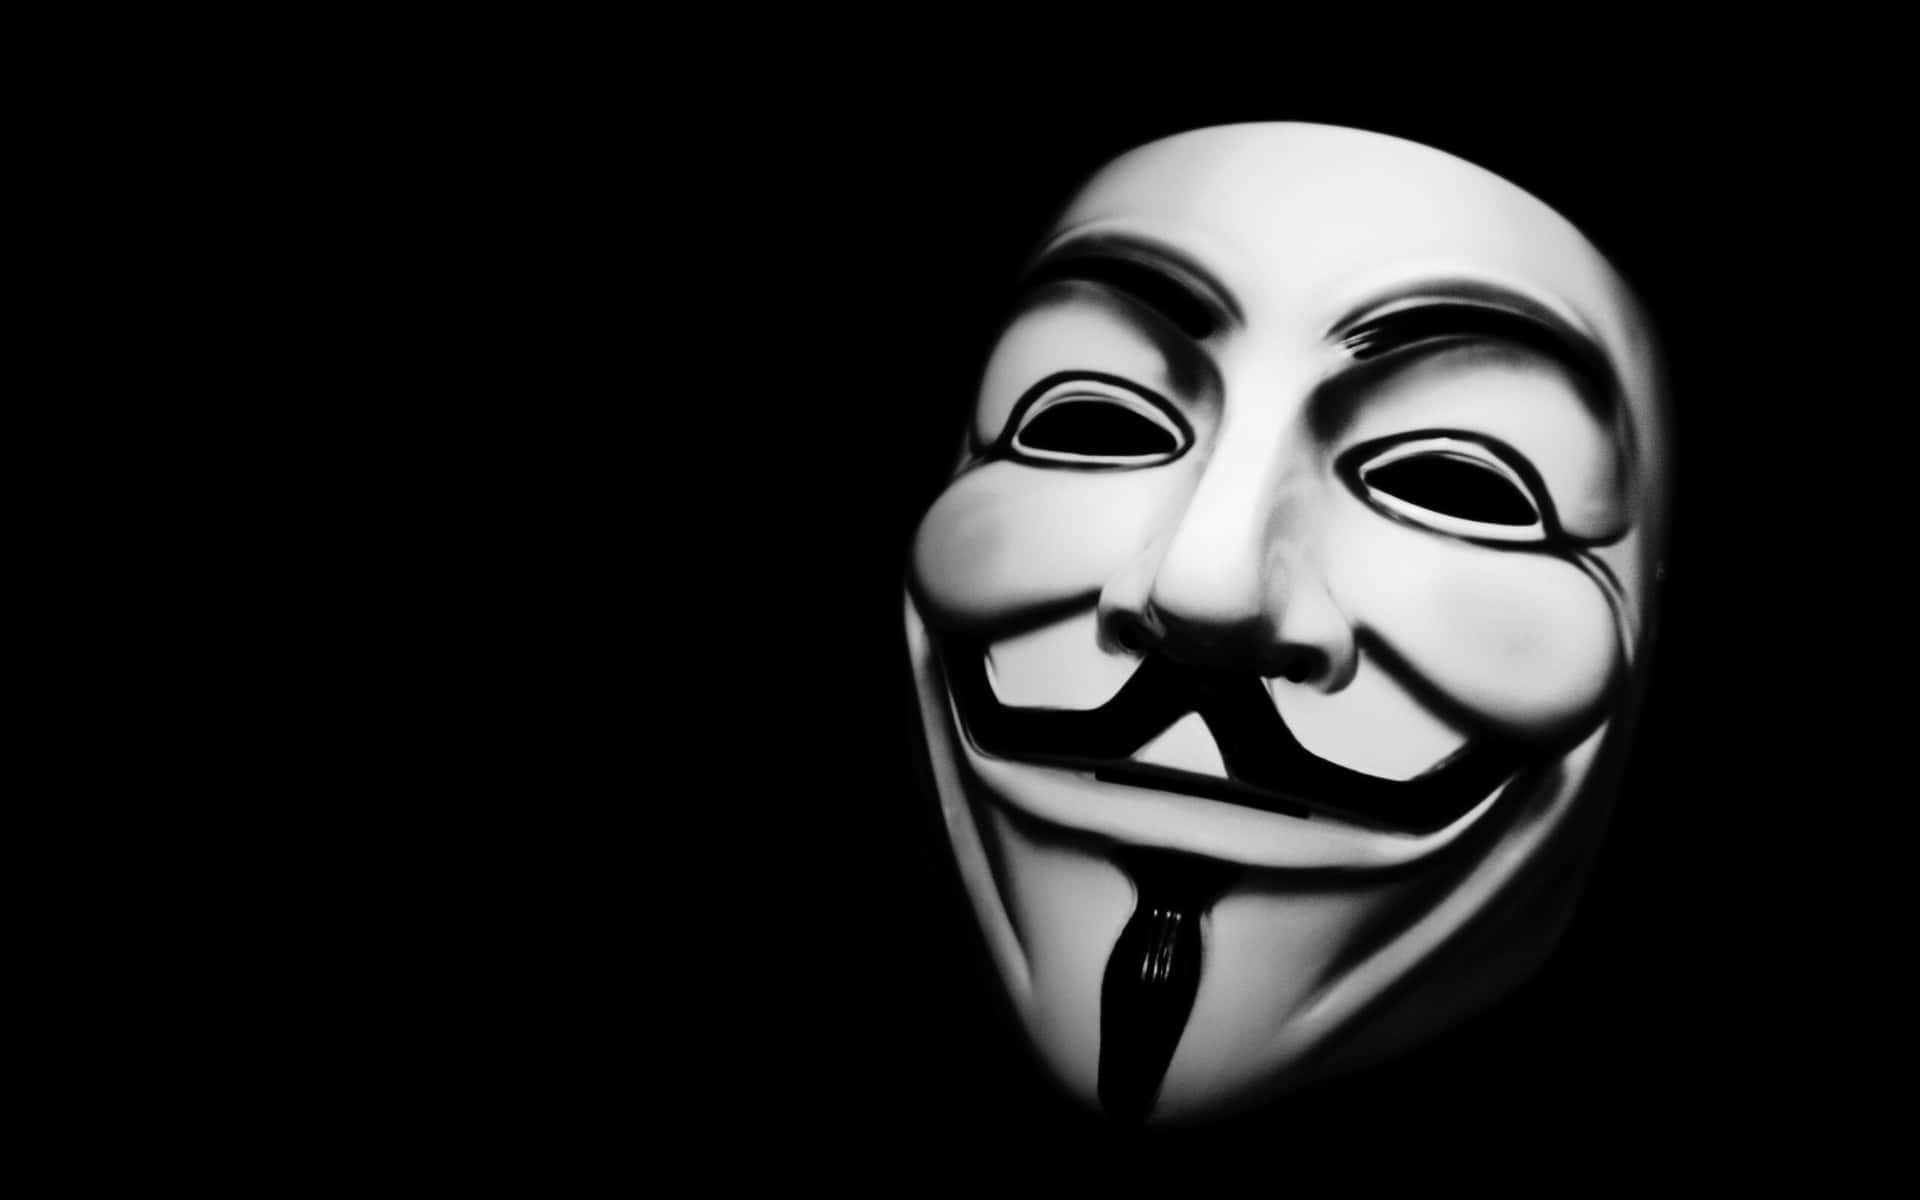 4k Mask Black & White Anonymous Hacker Background